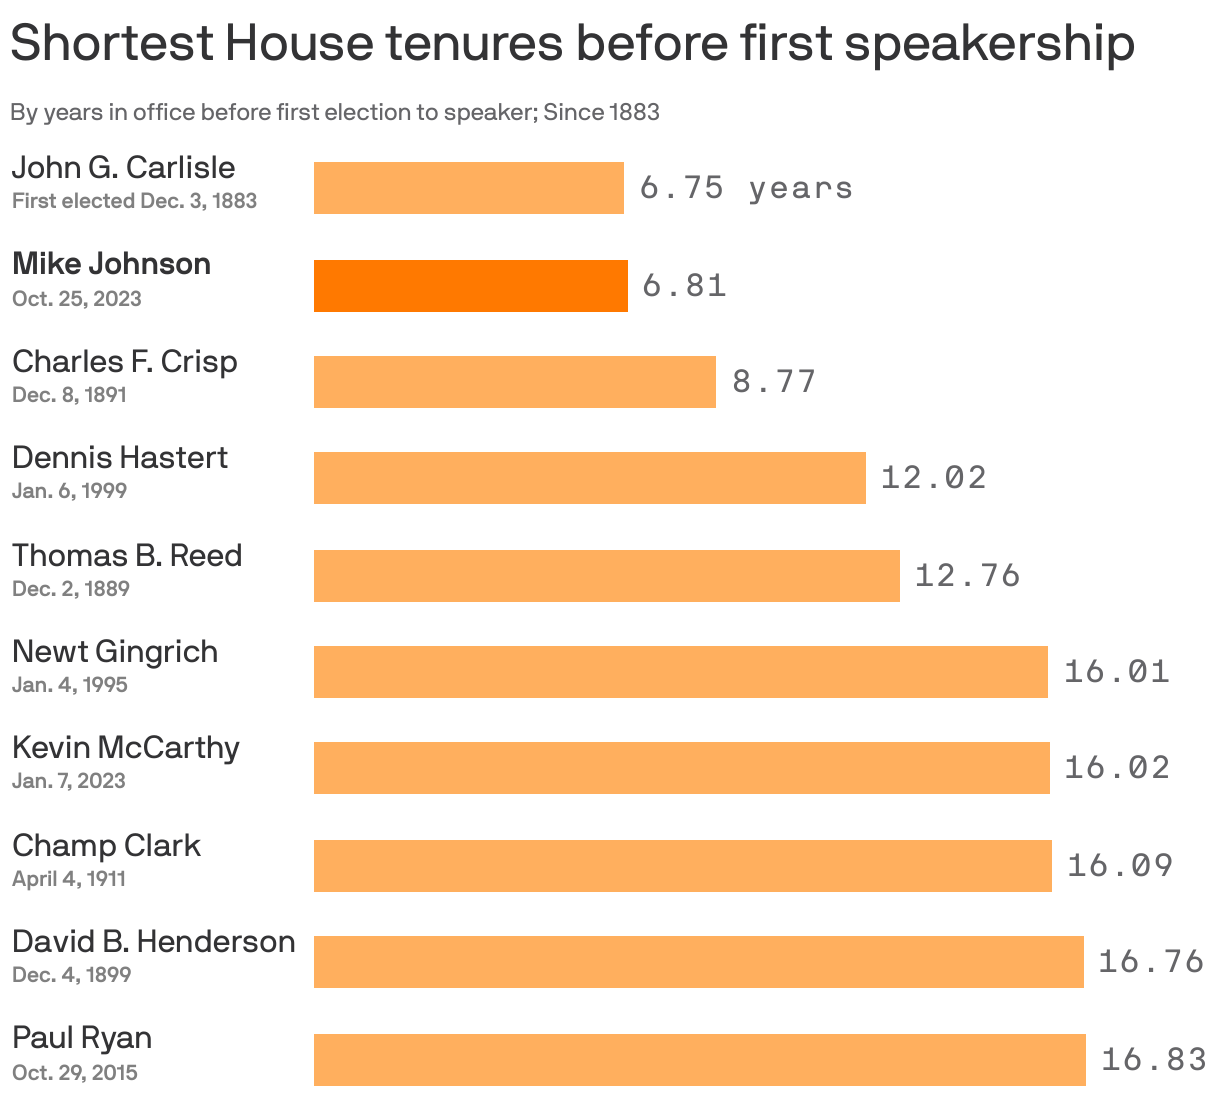 Shortest House tenures before first speakership